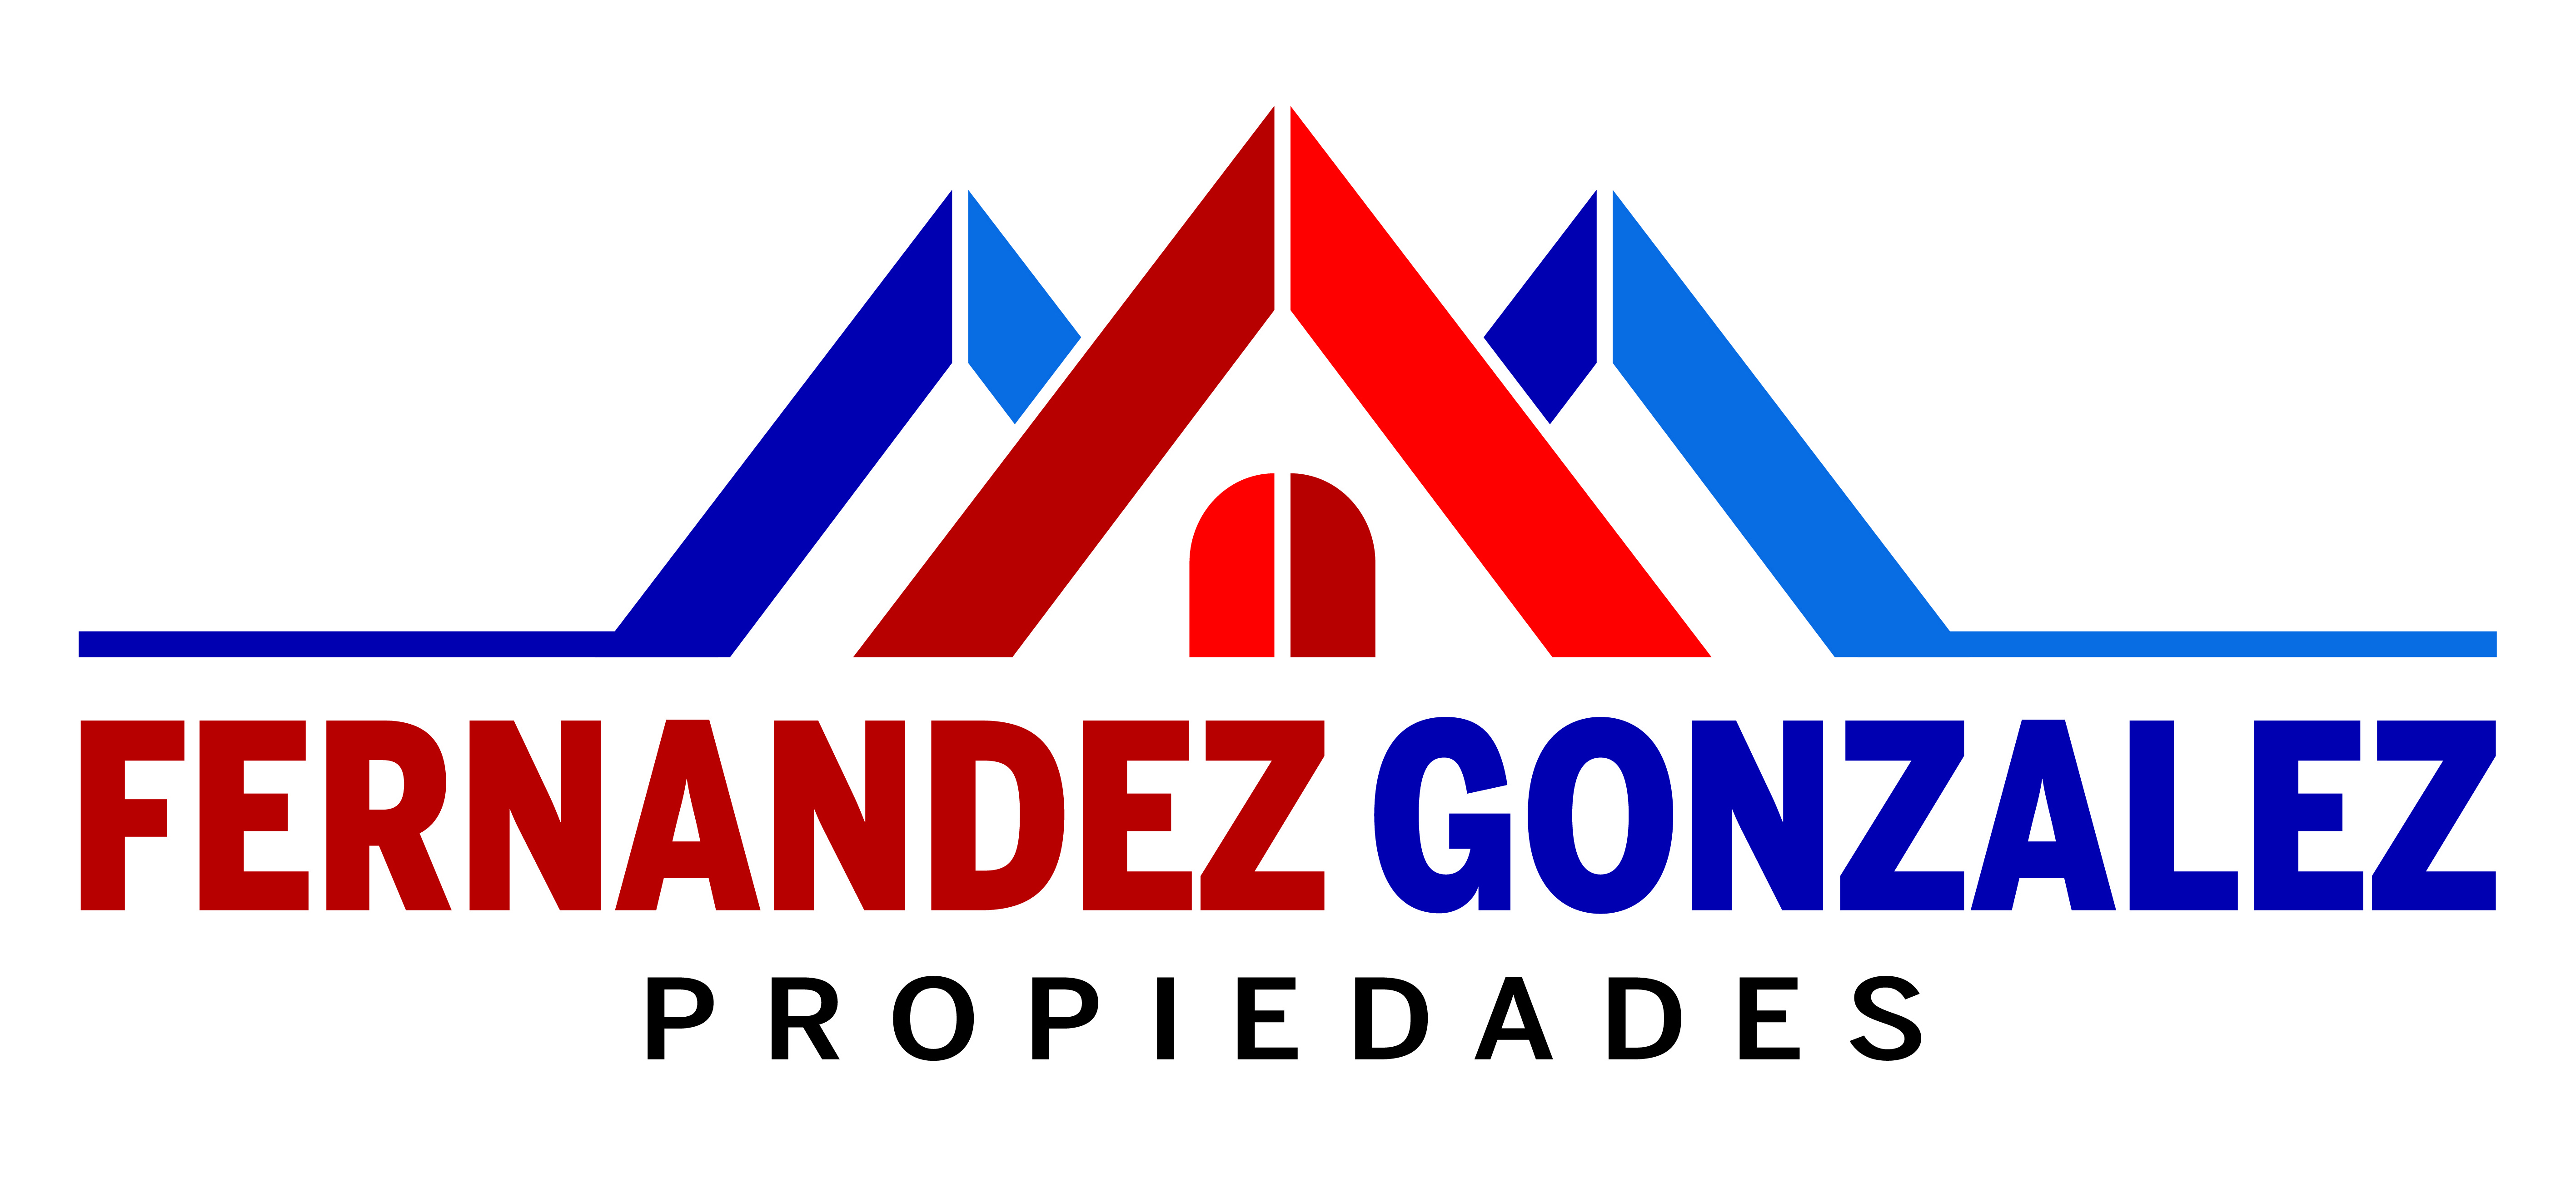 Fernandez Gonzalez Propiedades